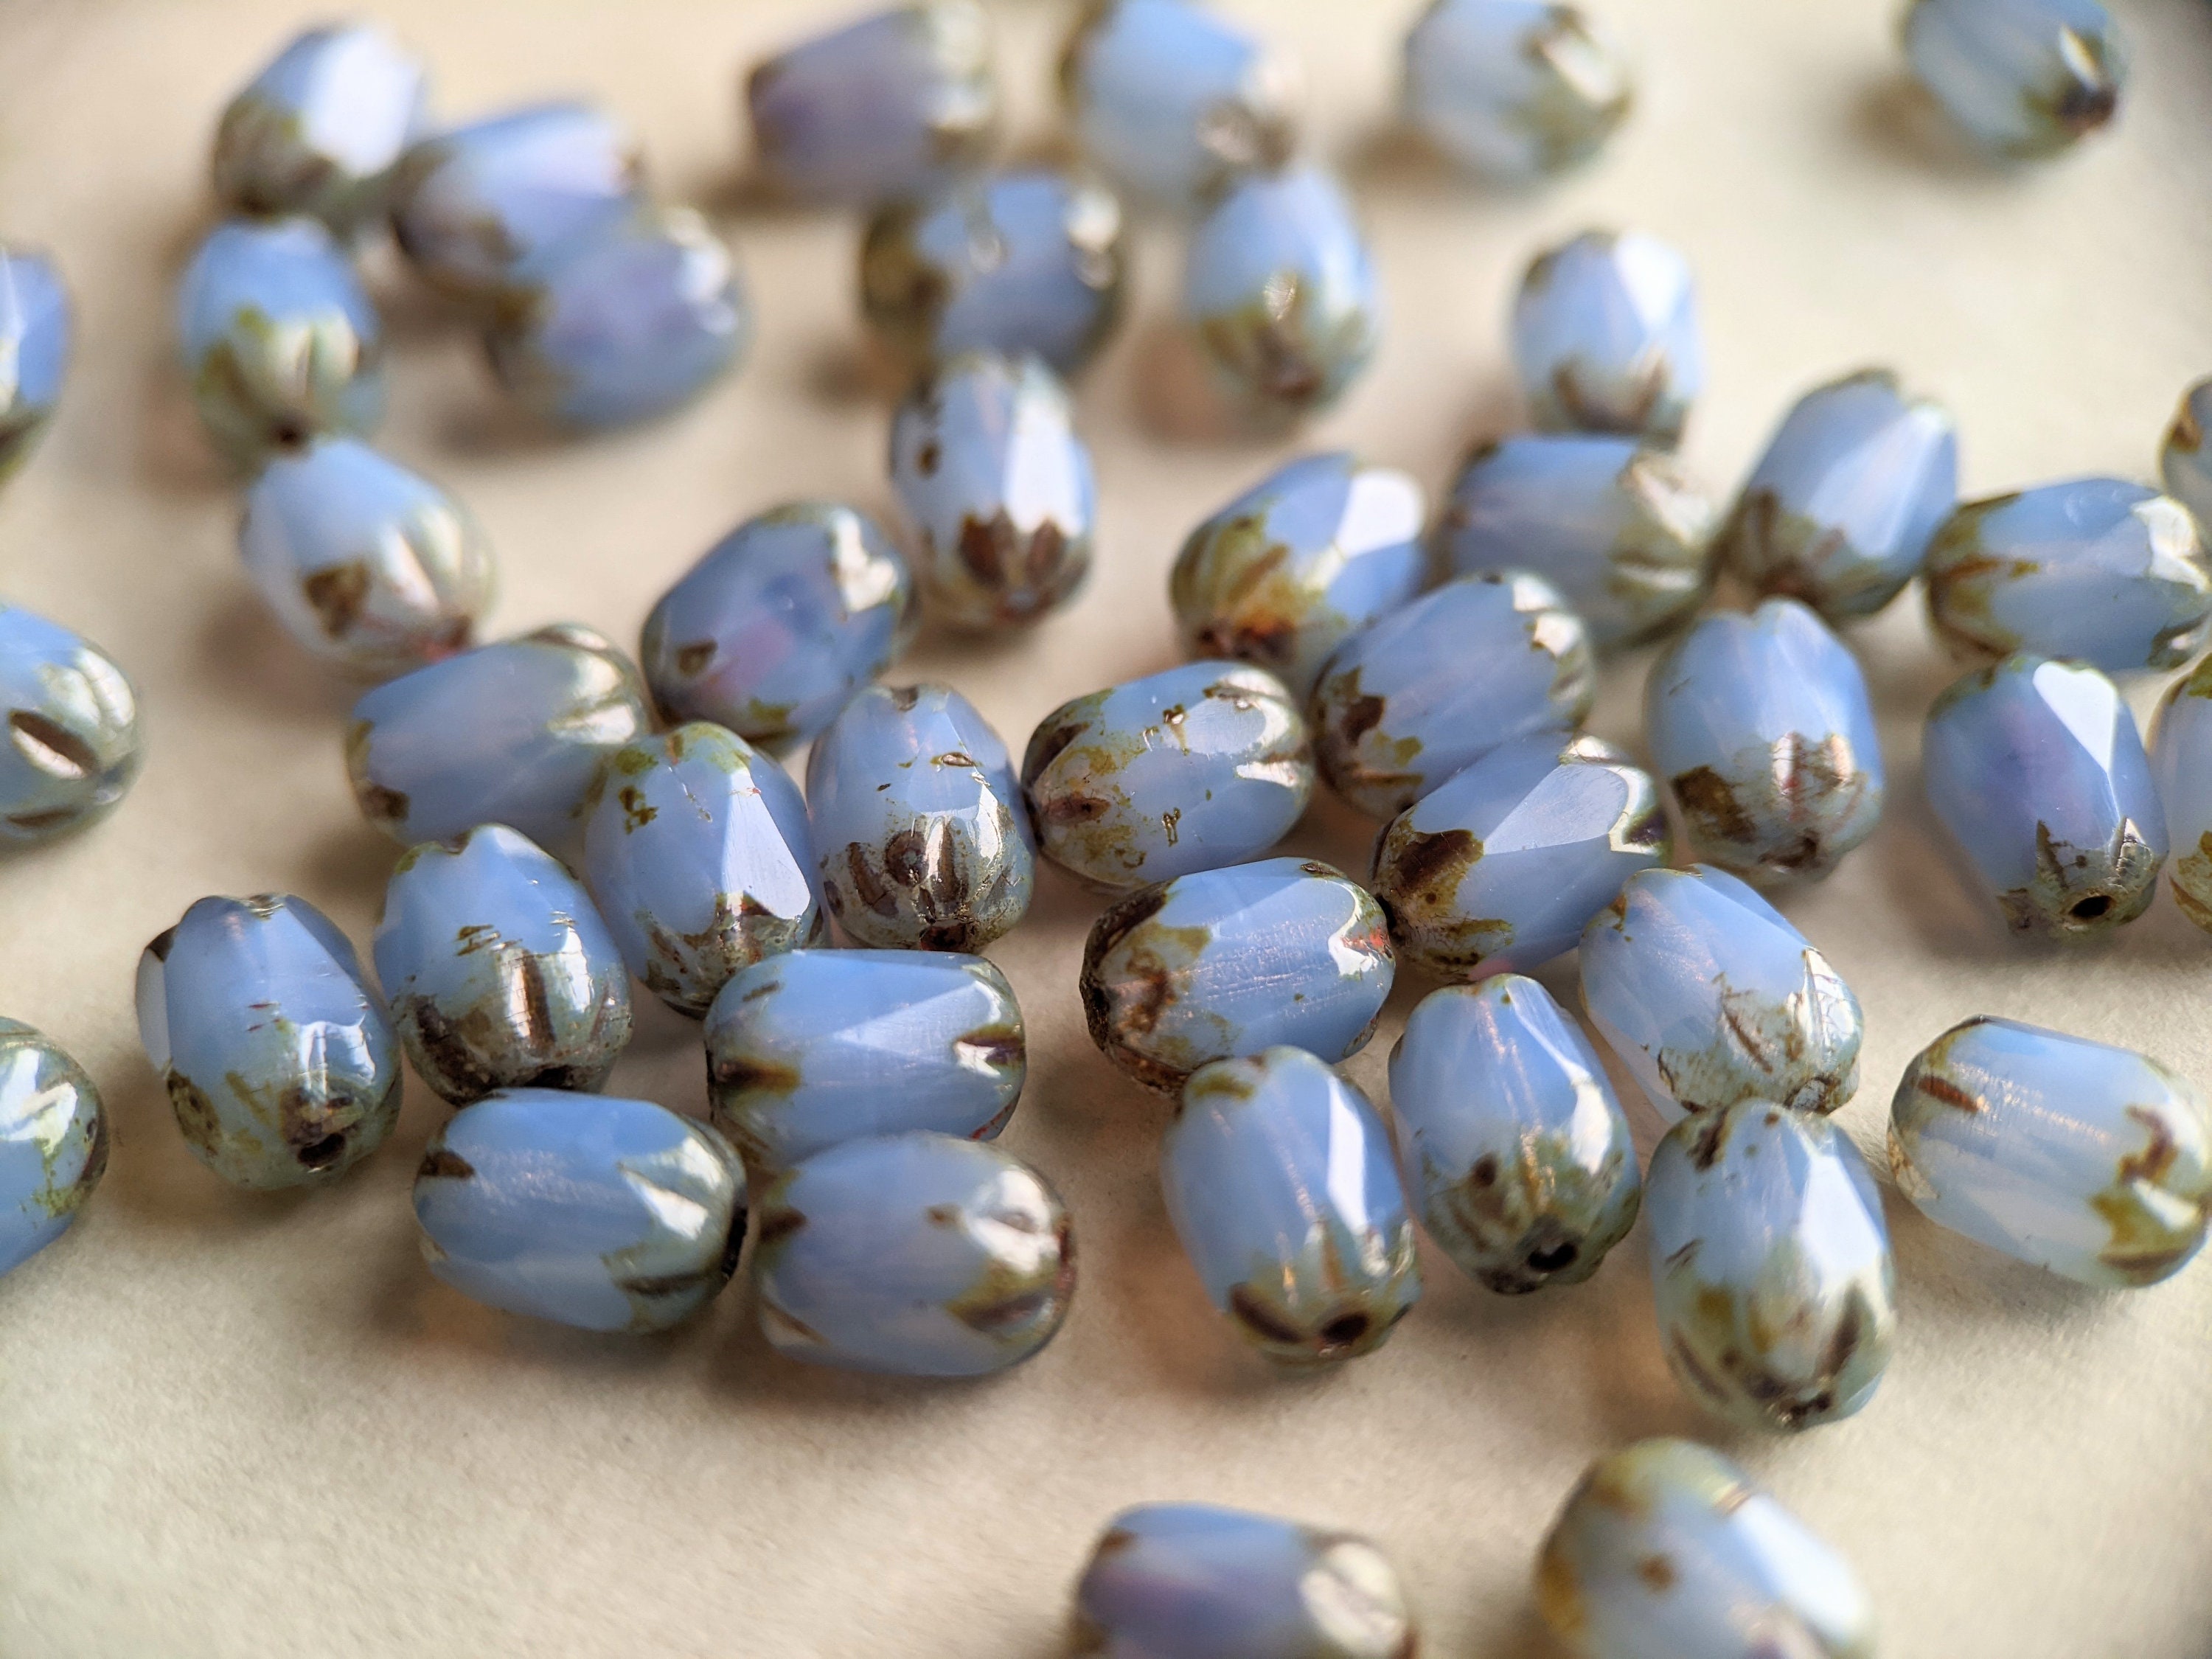 4mm Czech Aged Picasso Beads, Wrap Bracelet Beads, Glass Beads